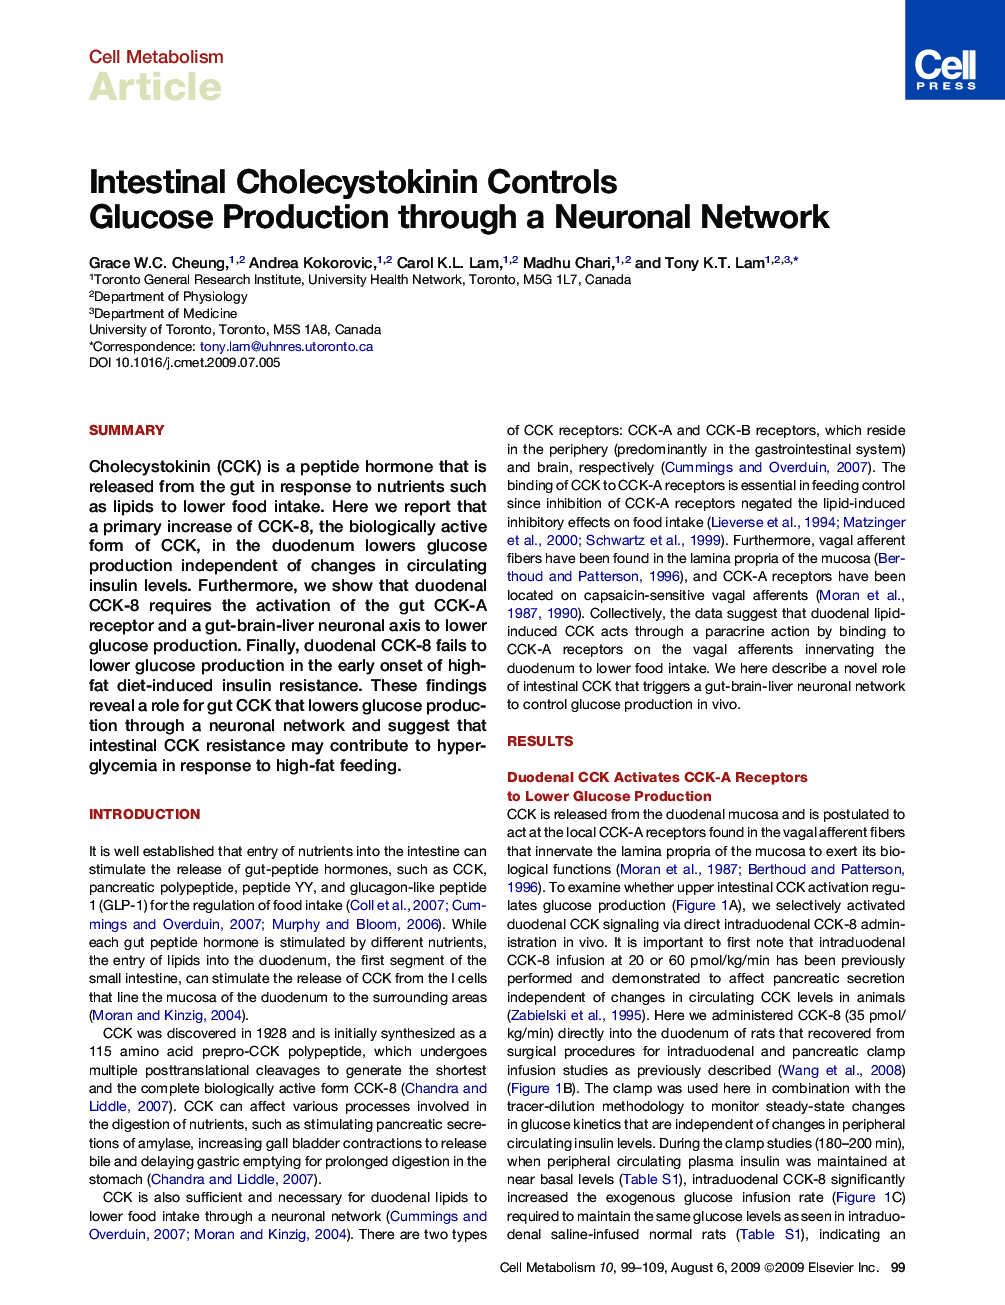 Intestinal Cholecystokinin Controls Glucose Production through a Neuronal Network